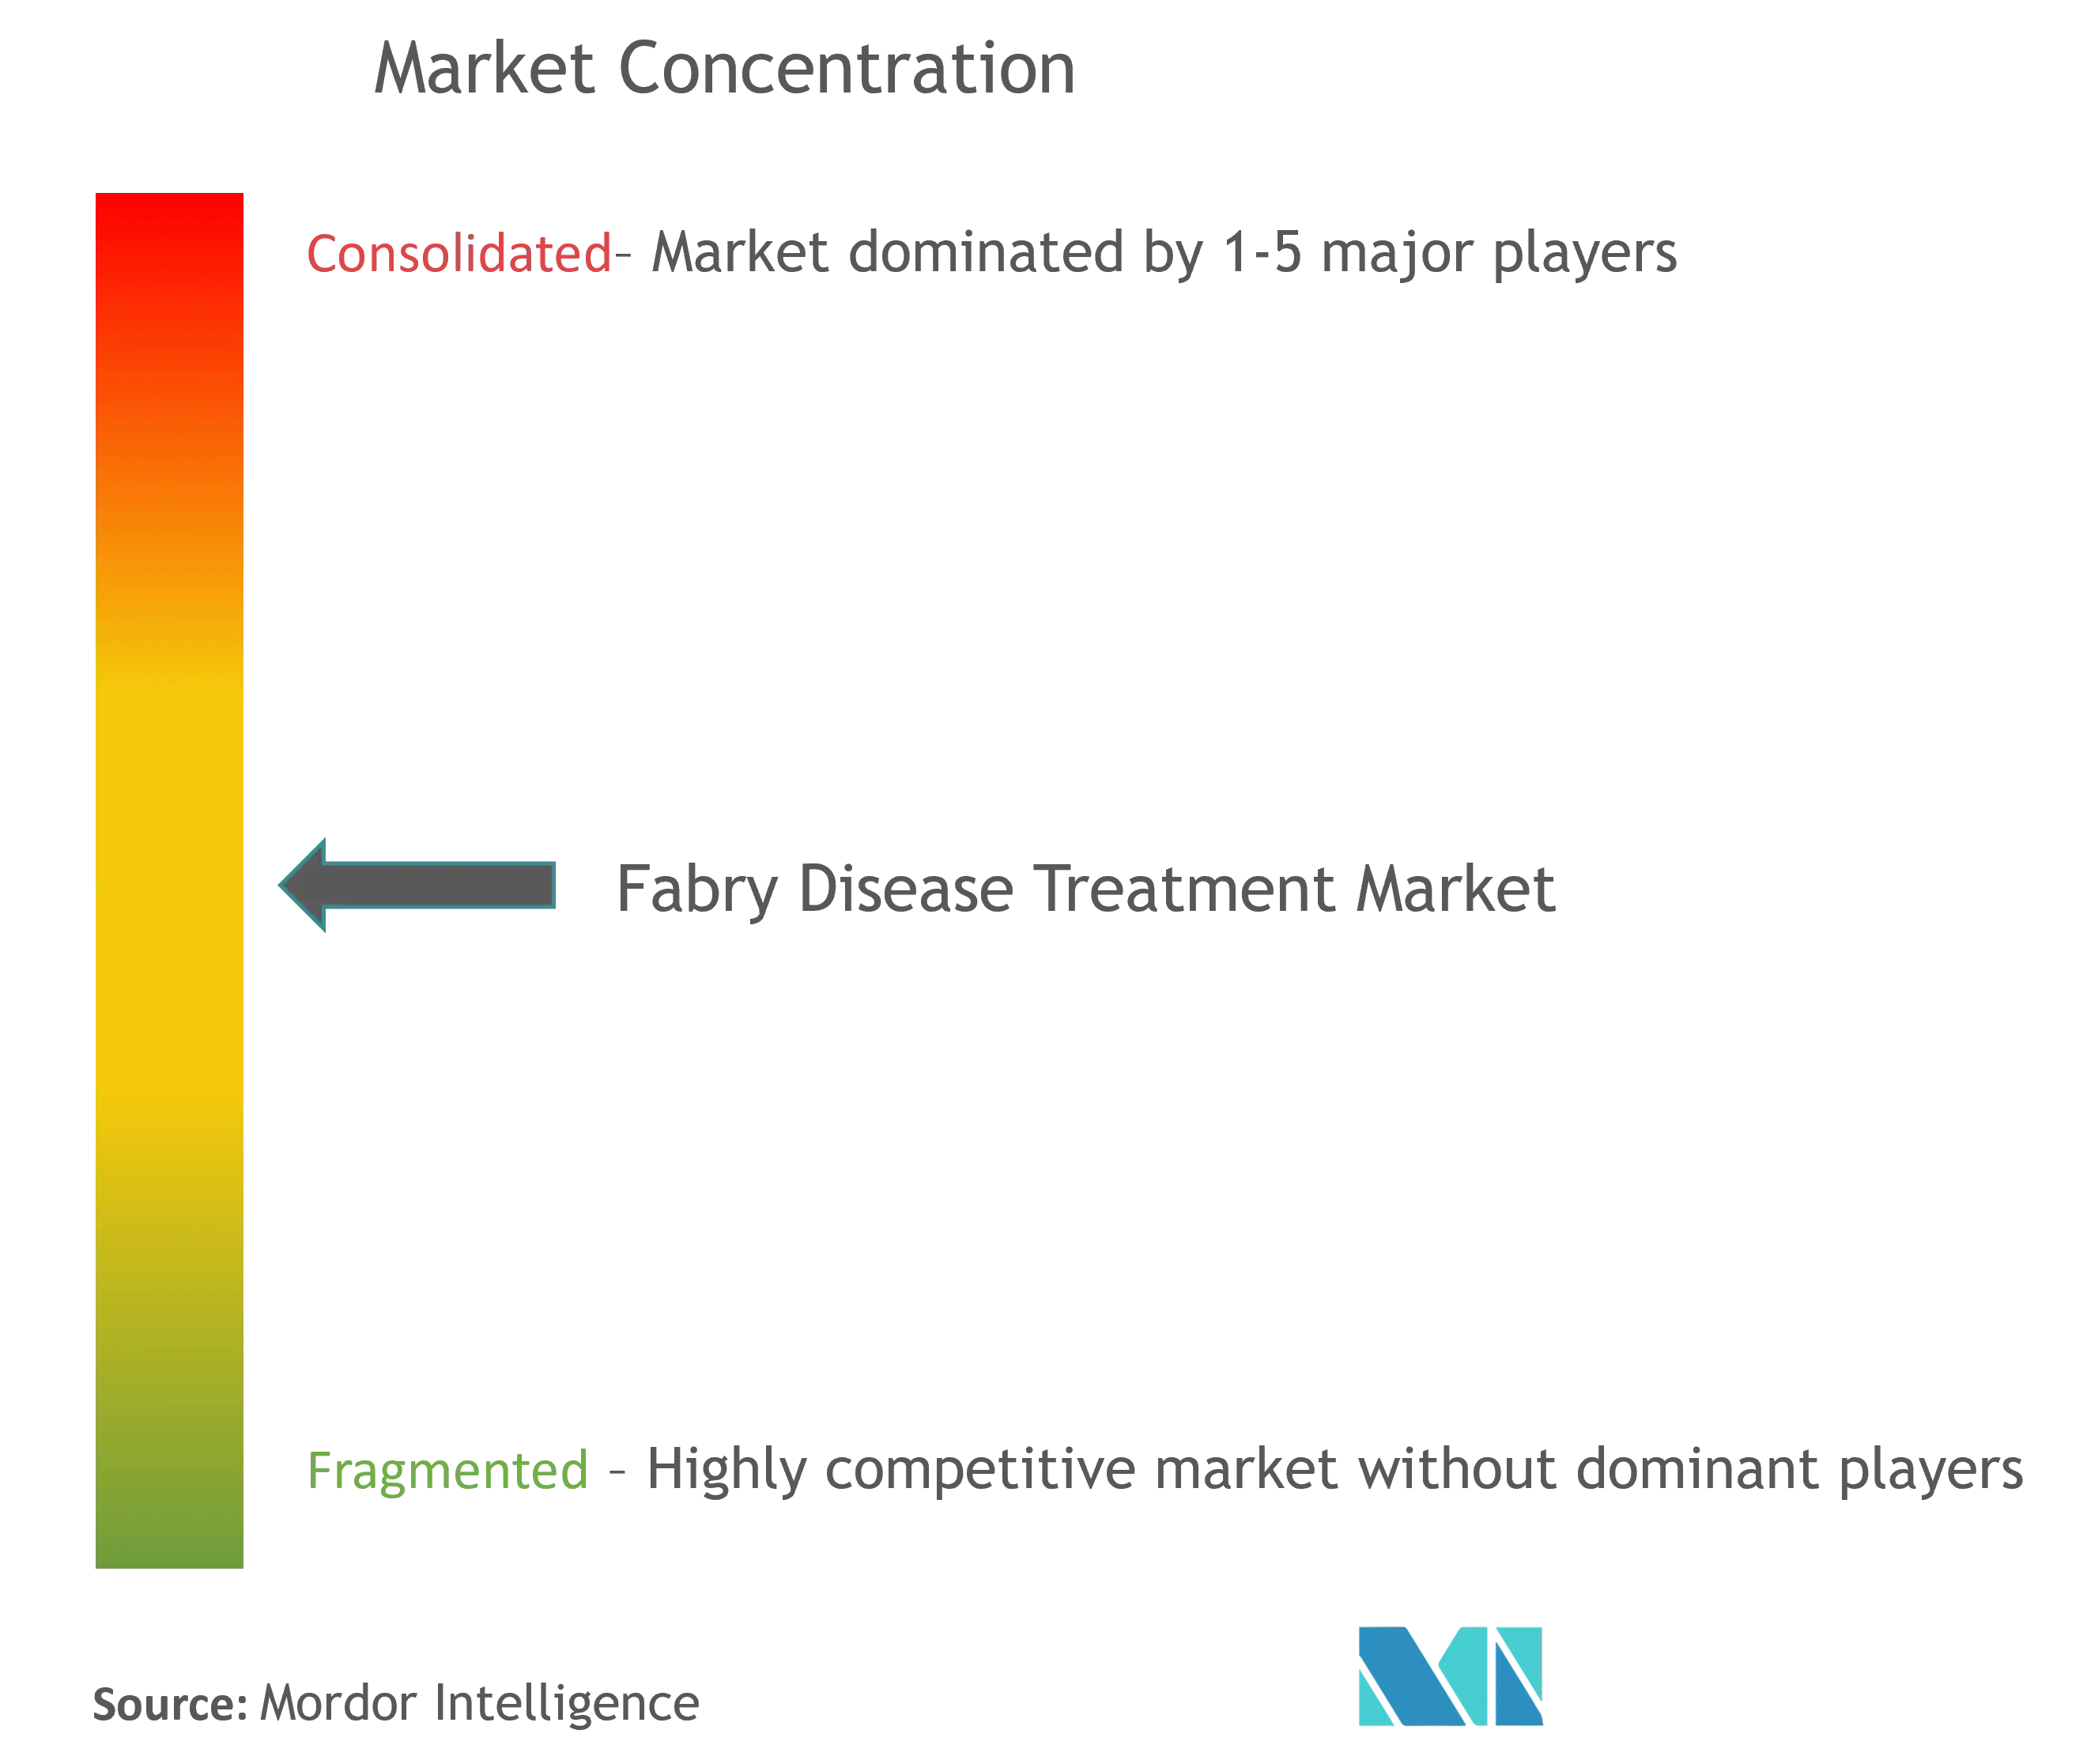 Fabry Disease Treatment Market Concentration